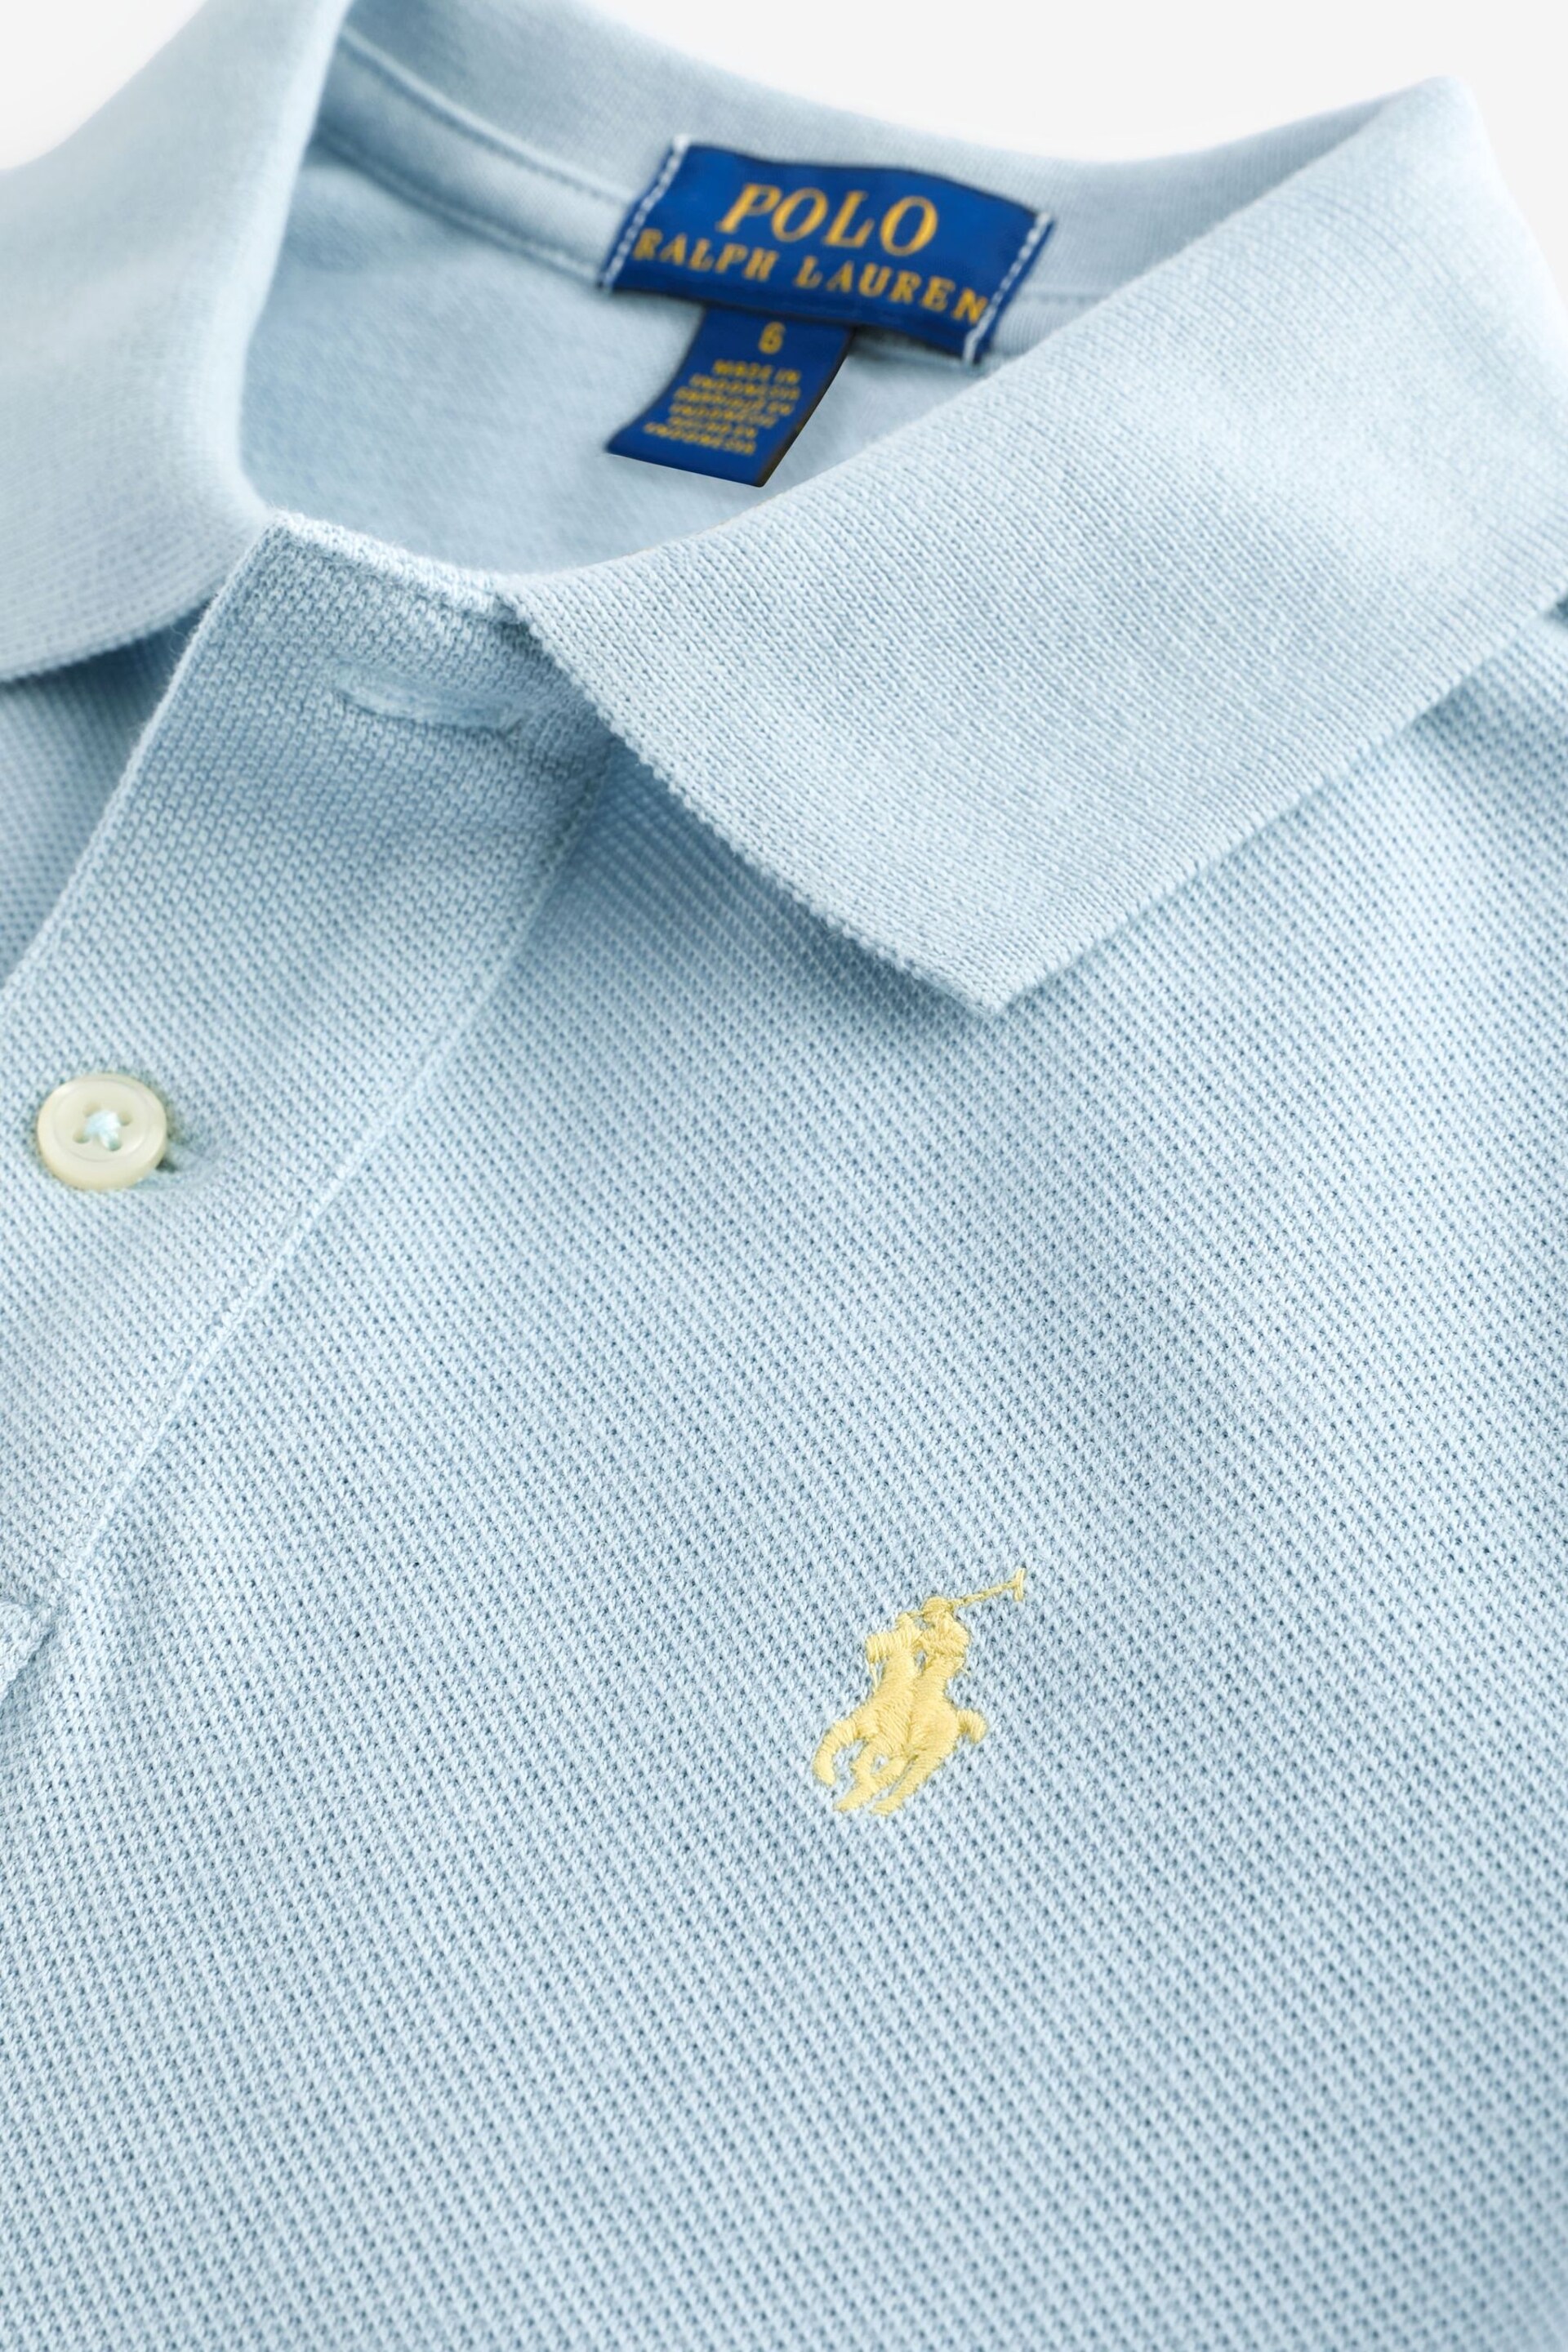 Polo Ralph Lauren Boys Iconic Polo Shirt - Image 3 of 4